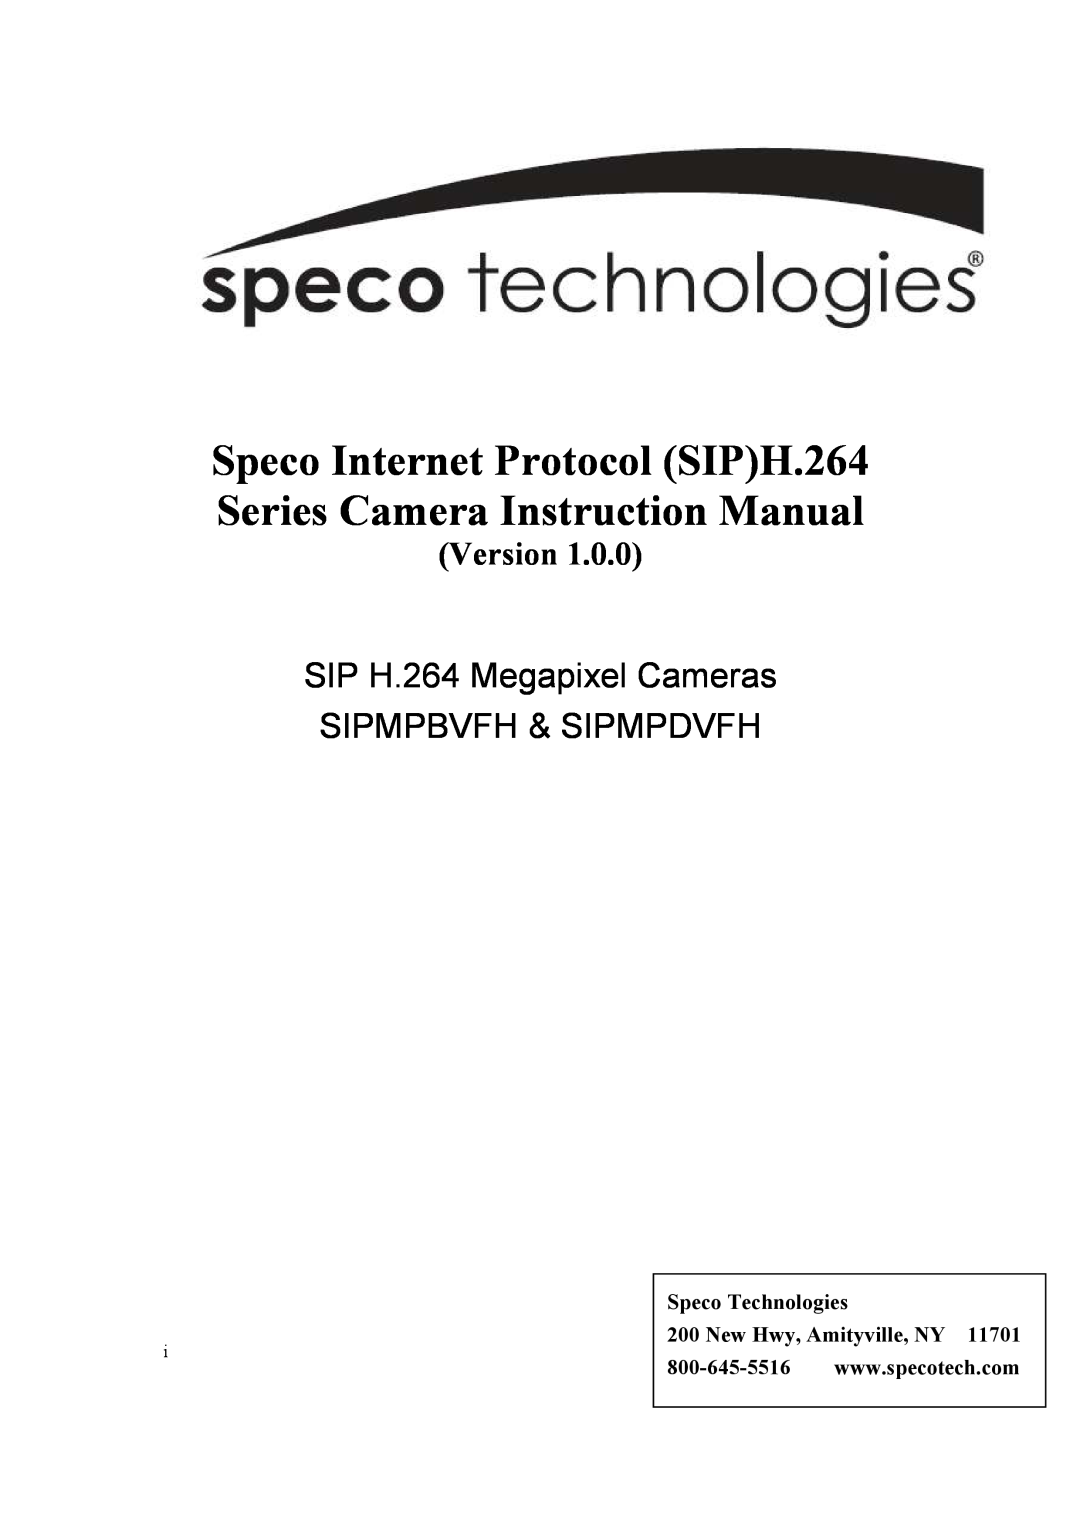 Speco Technologies instruction manual SIP H.264 Megapixel Cameras SIPMPBVFH & SIPMPDVFH, Version 